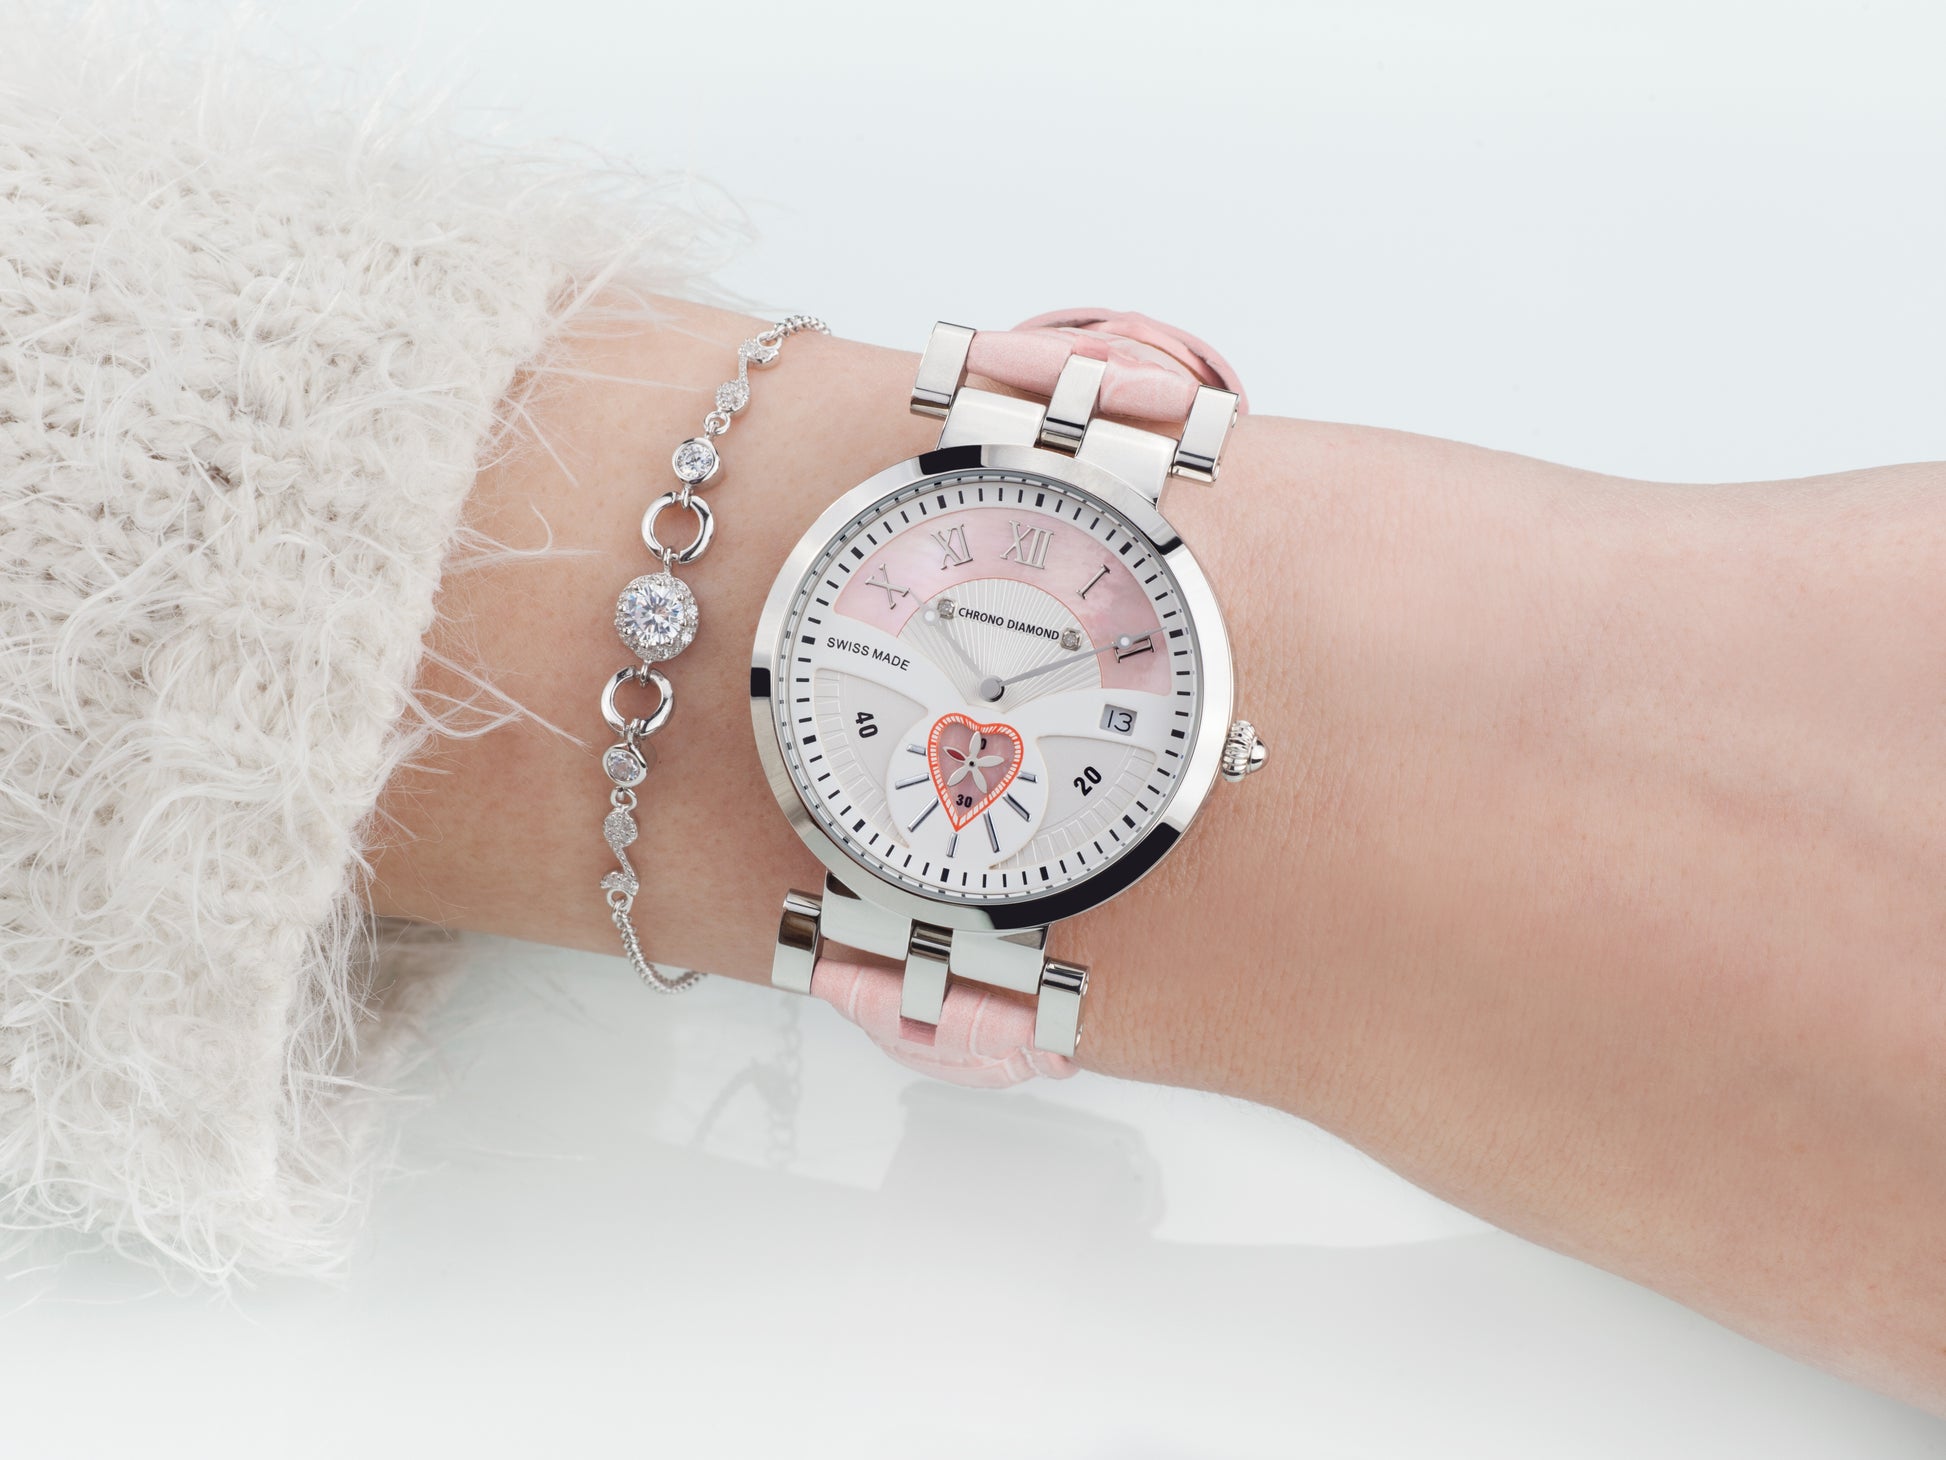 Automatic watches — Feronia — Chrono Diamond — steel pink